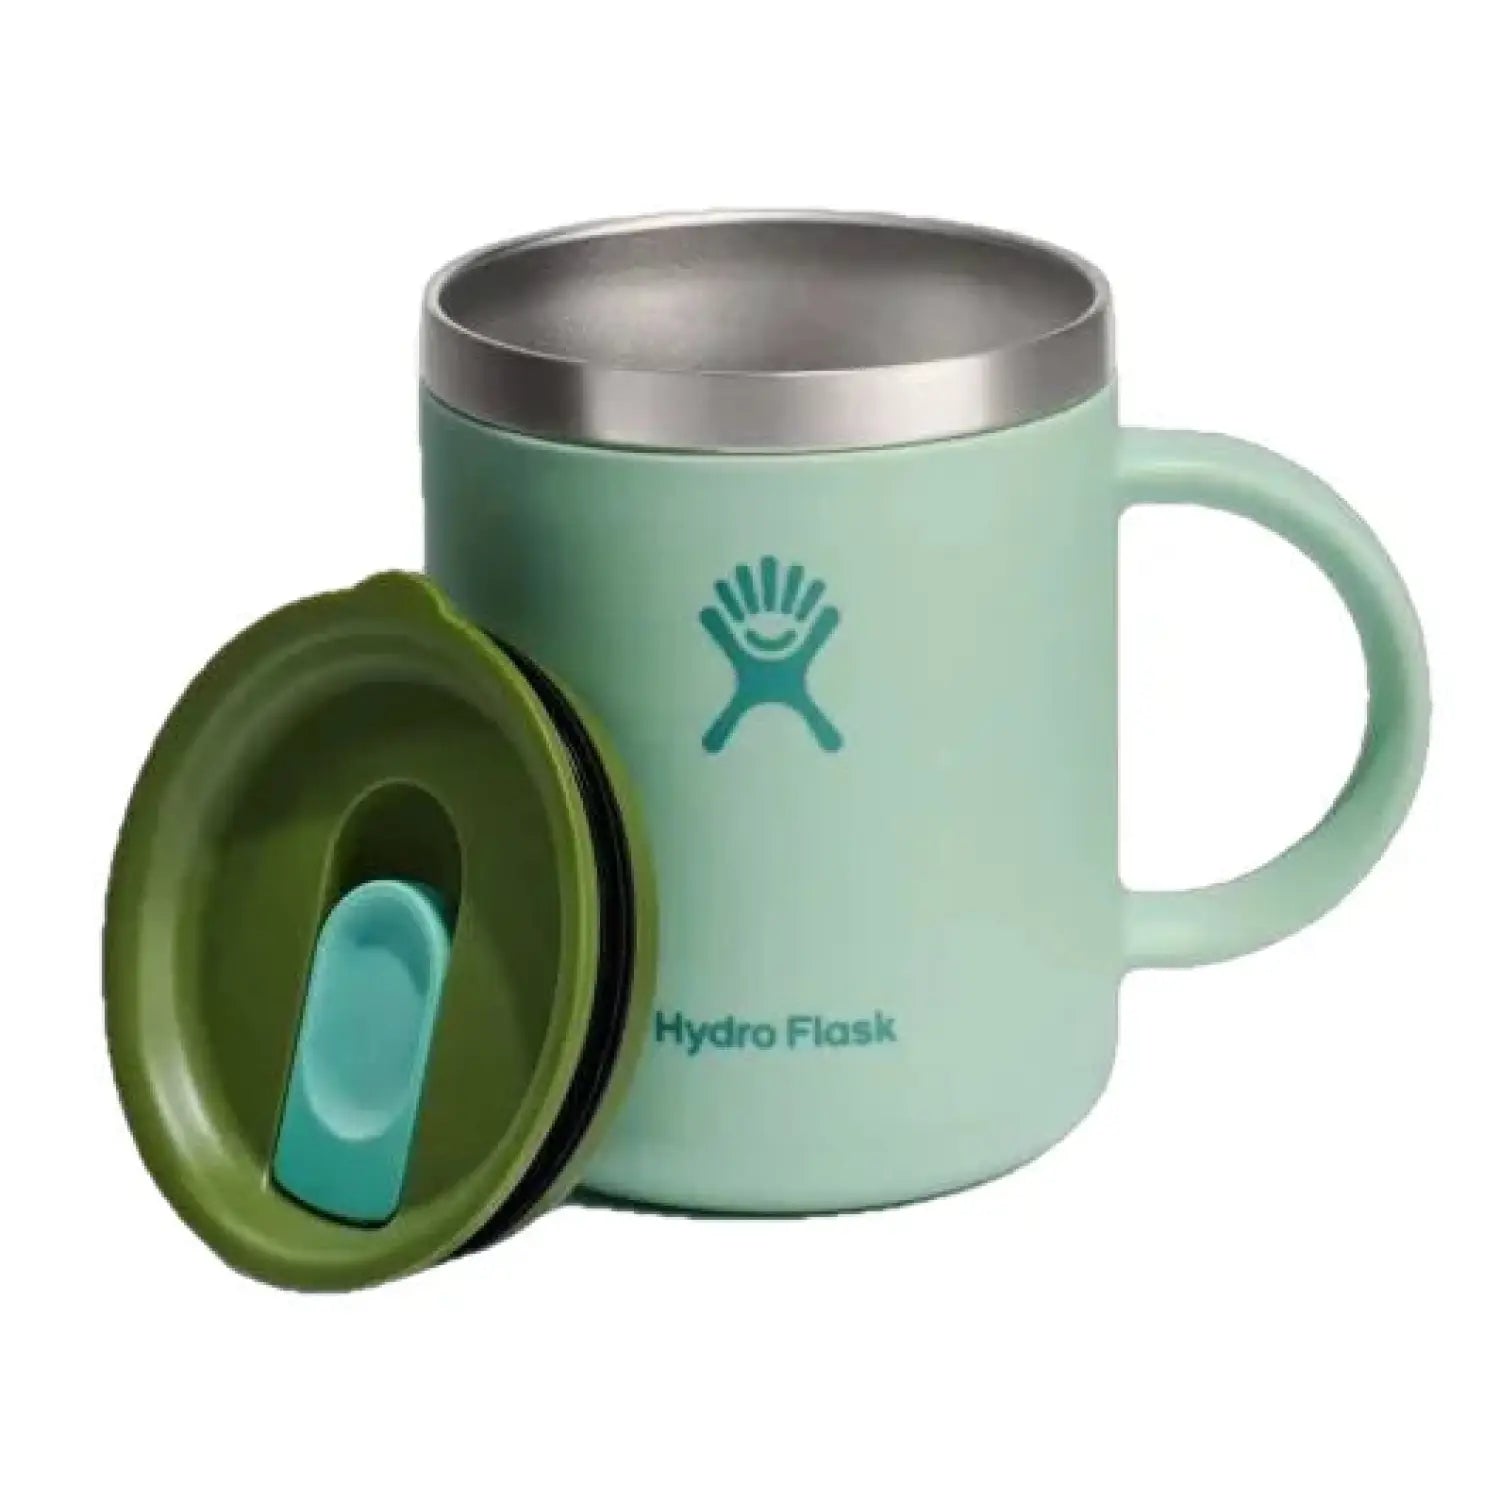 Hydro Flask Let's Go Together 12 oz Mug. Aqua colored mug, blue Hydroflask logo. Green lid also shown.